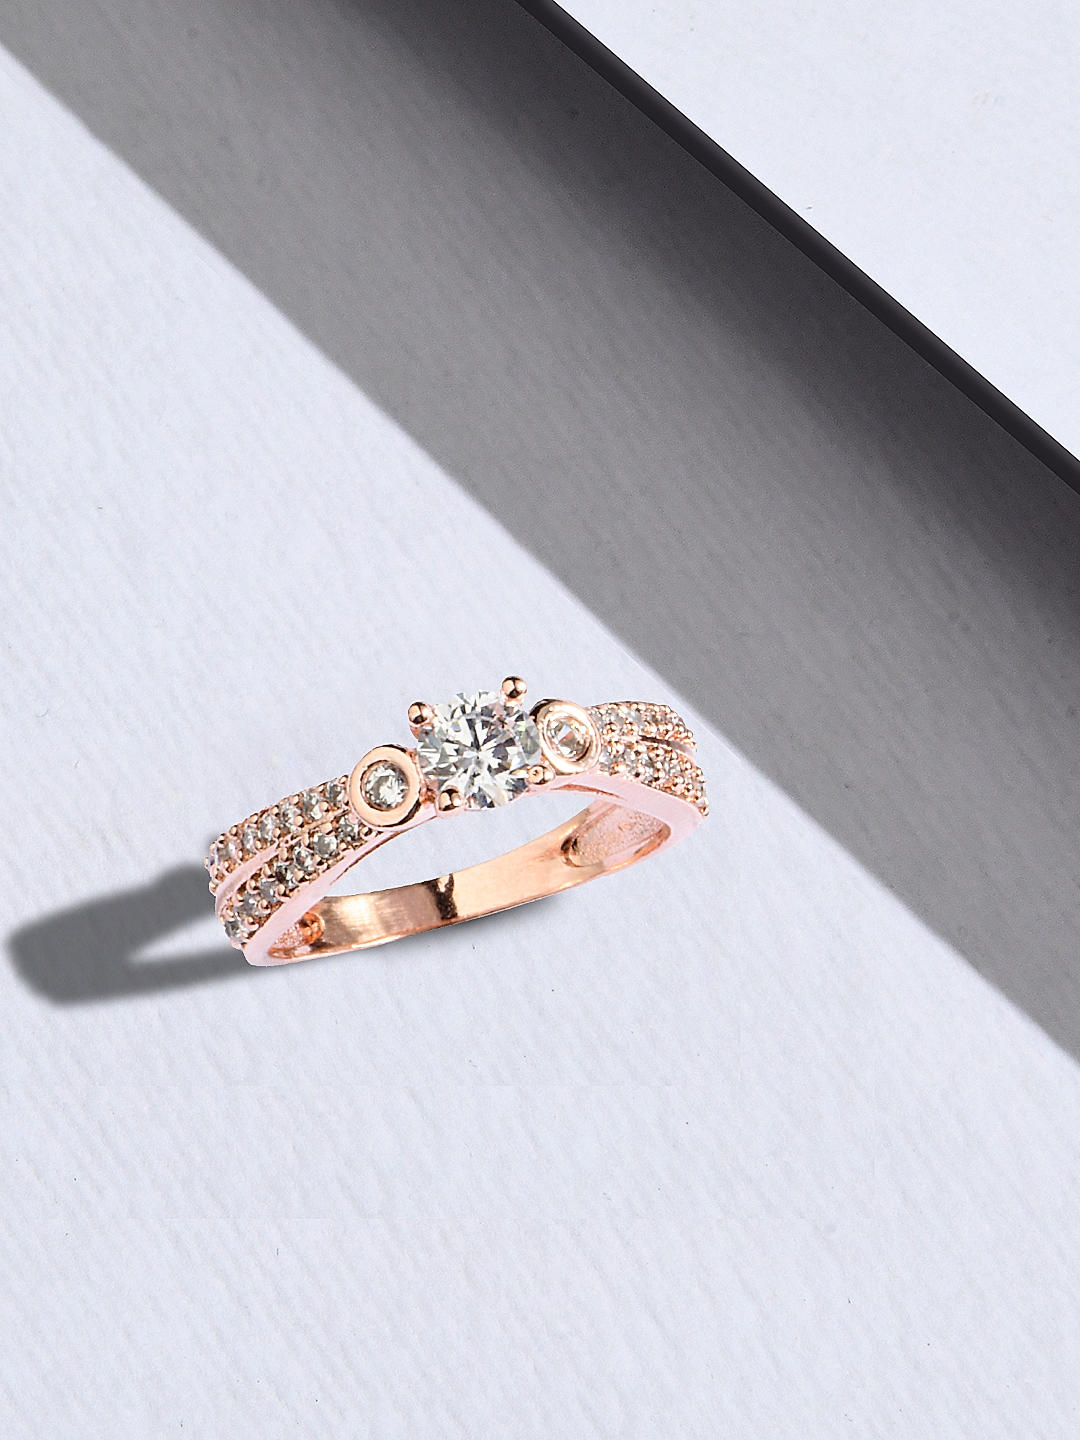 Twin Heart Shape Diamond Fashion Ring - 34748PEADTSPG – Powell Jewelry